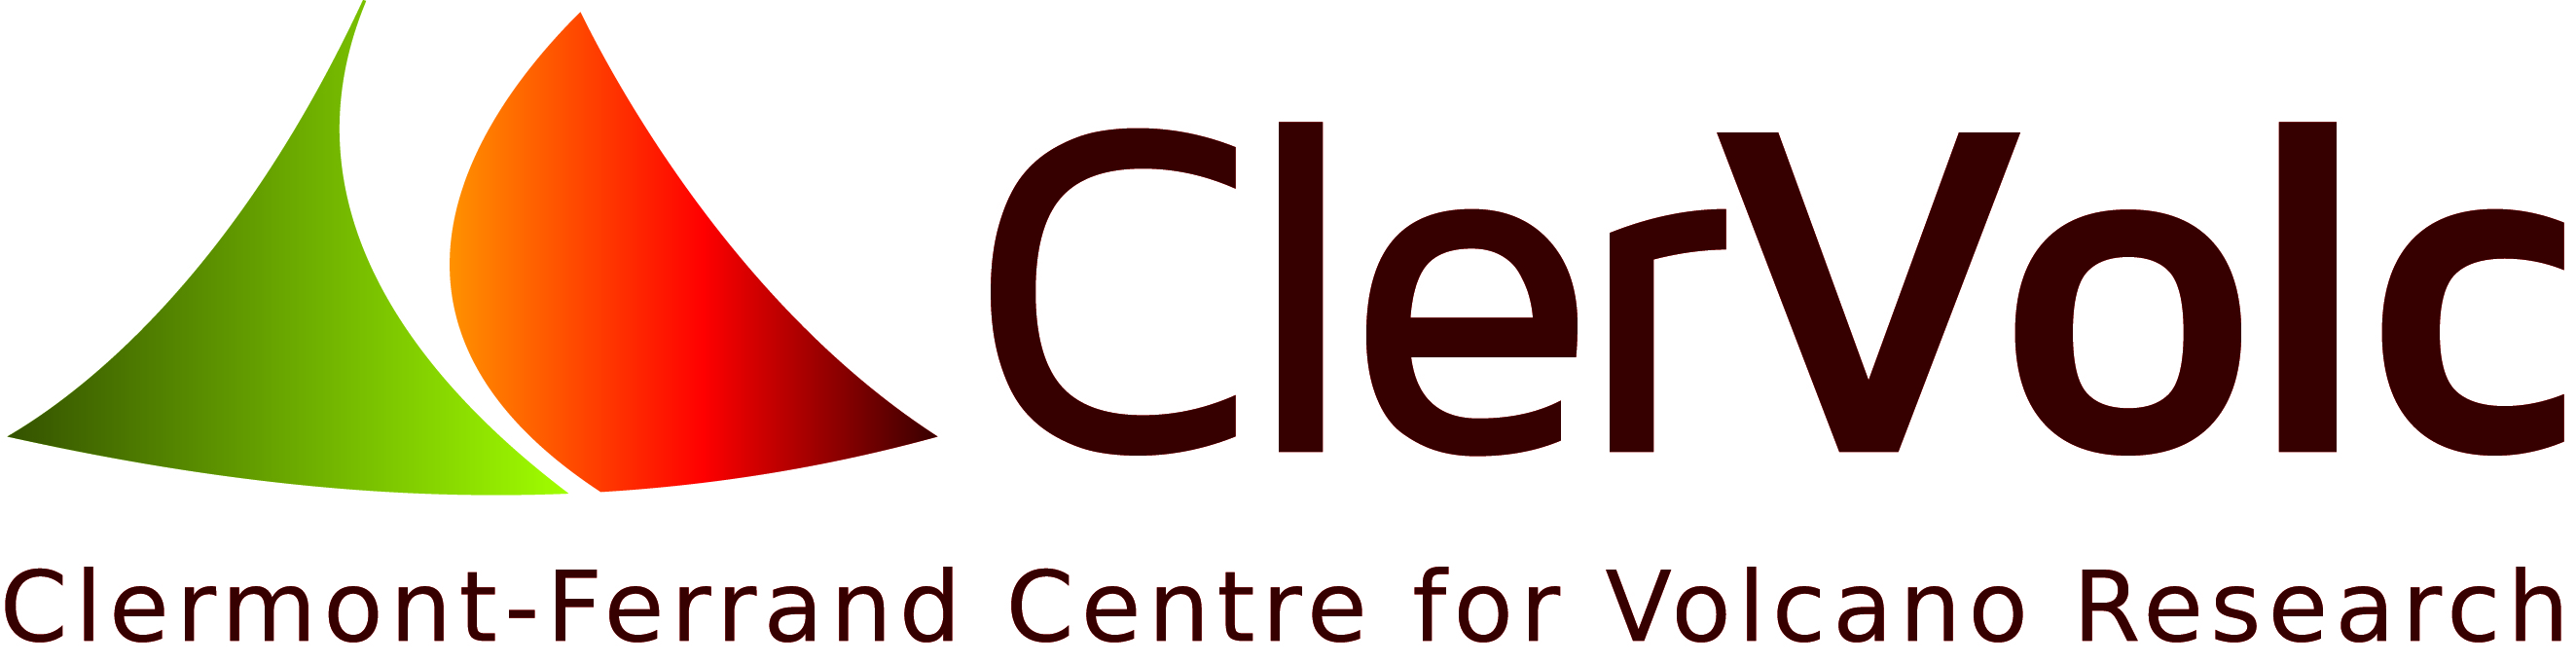 CLERVOLC logo